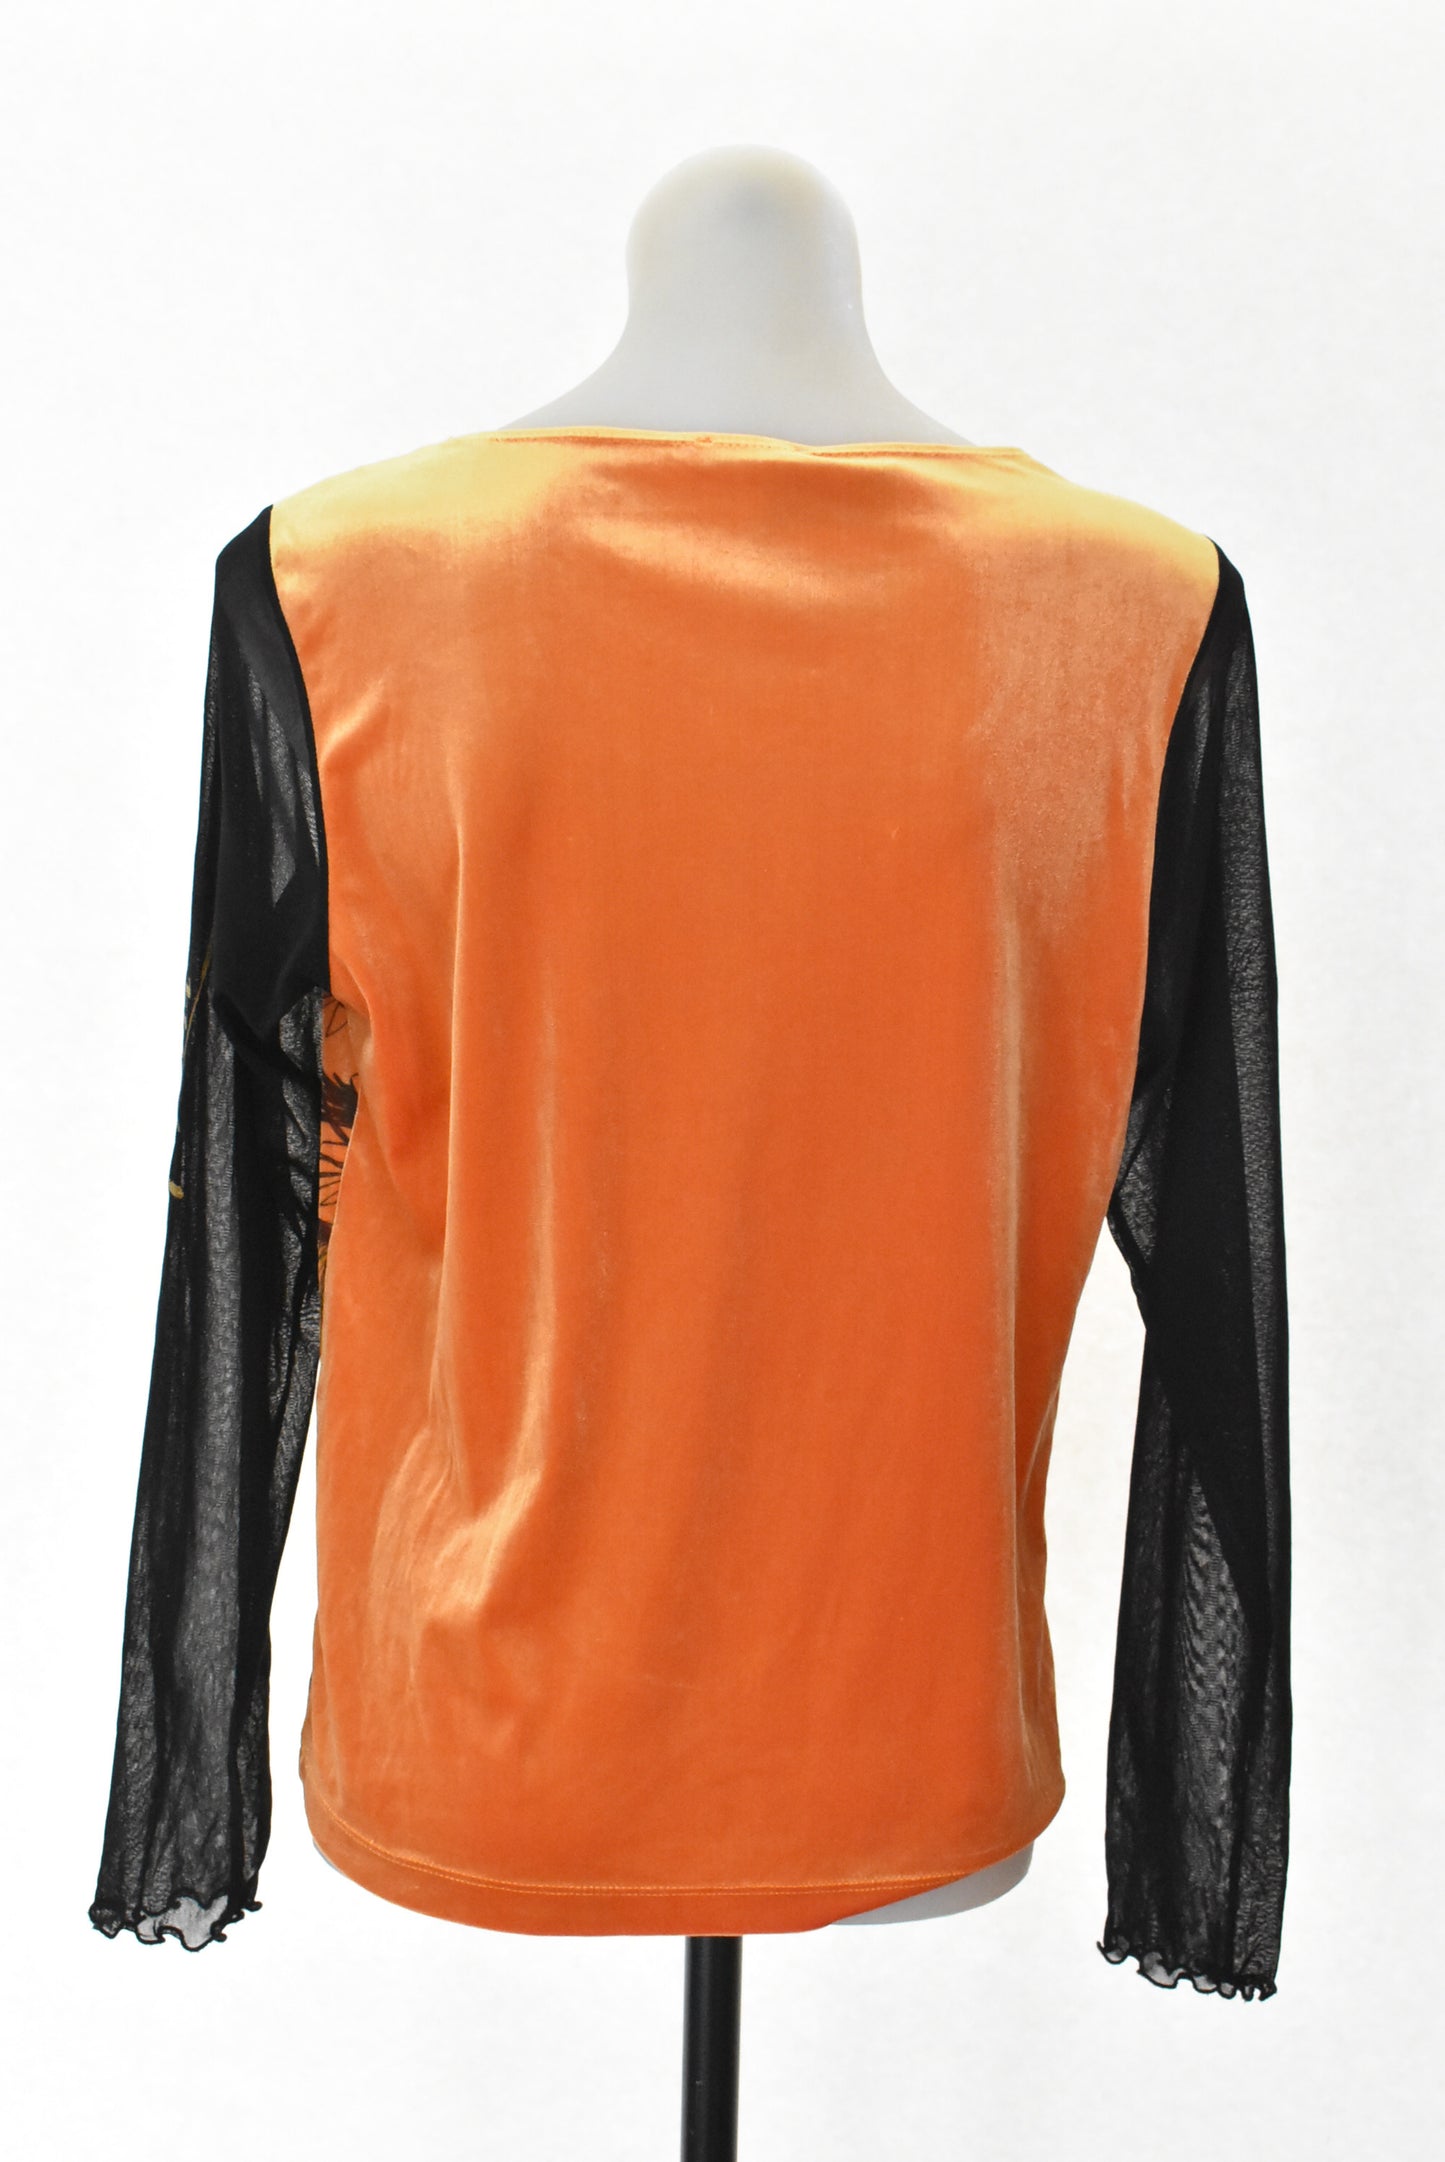 Vamp orange velvet top, 16 (retro)